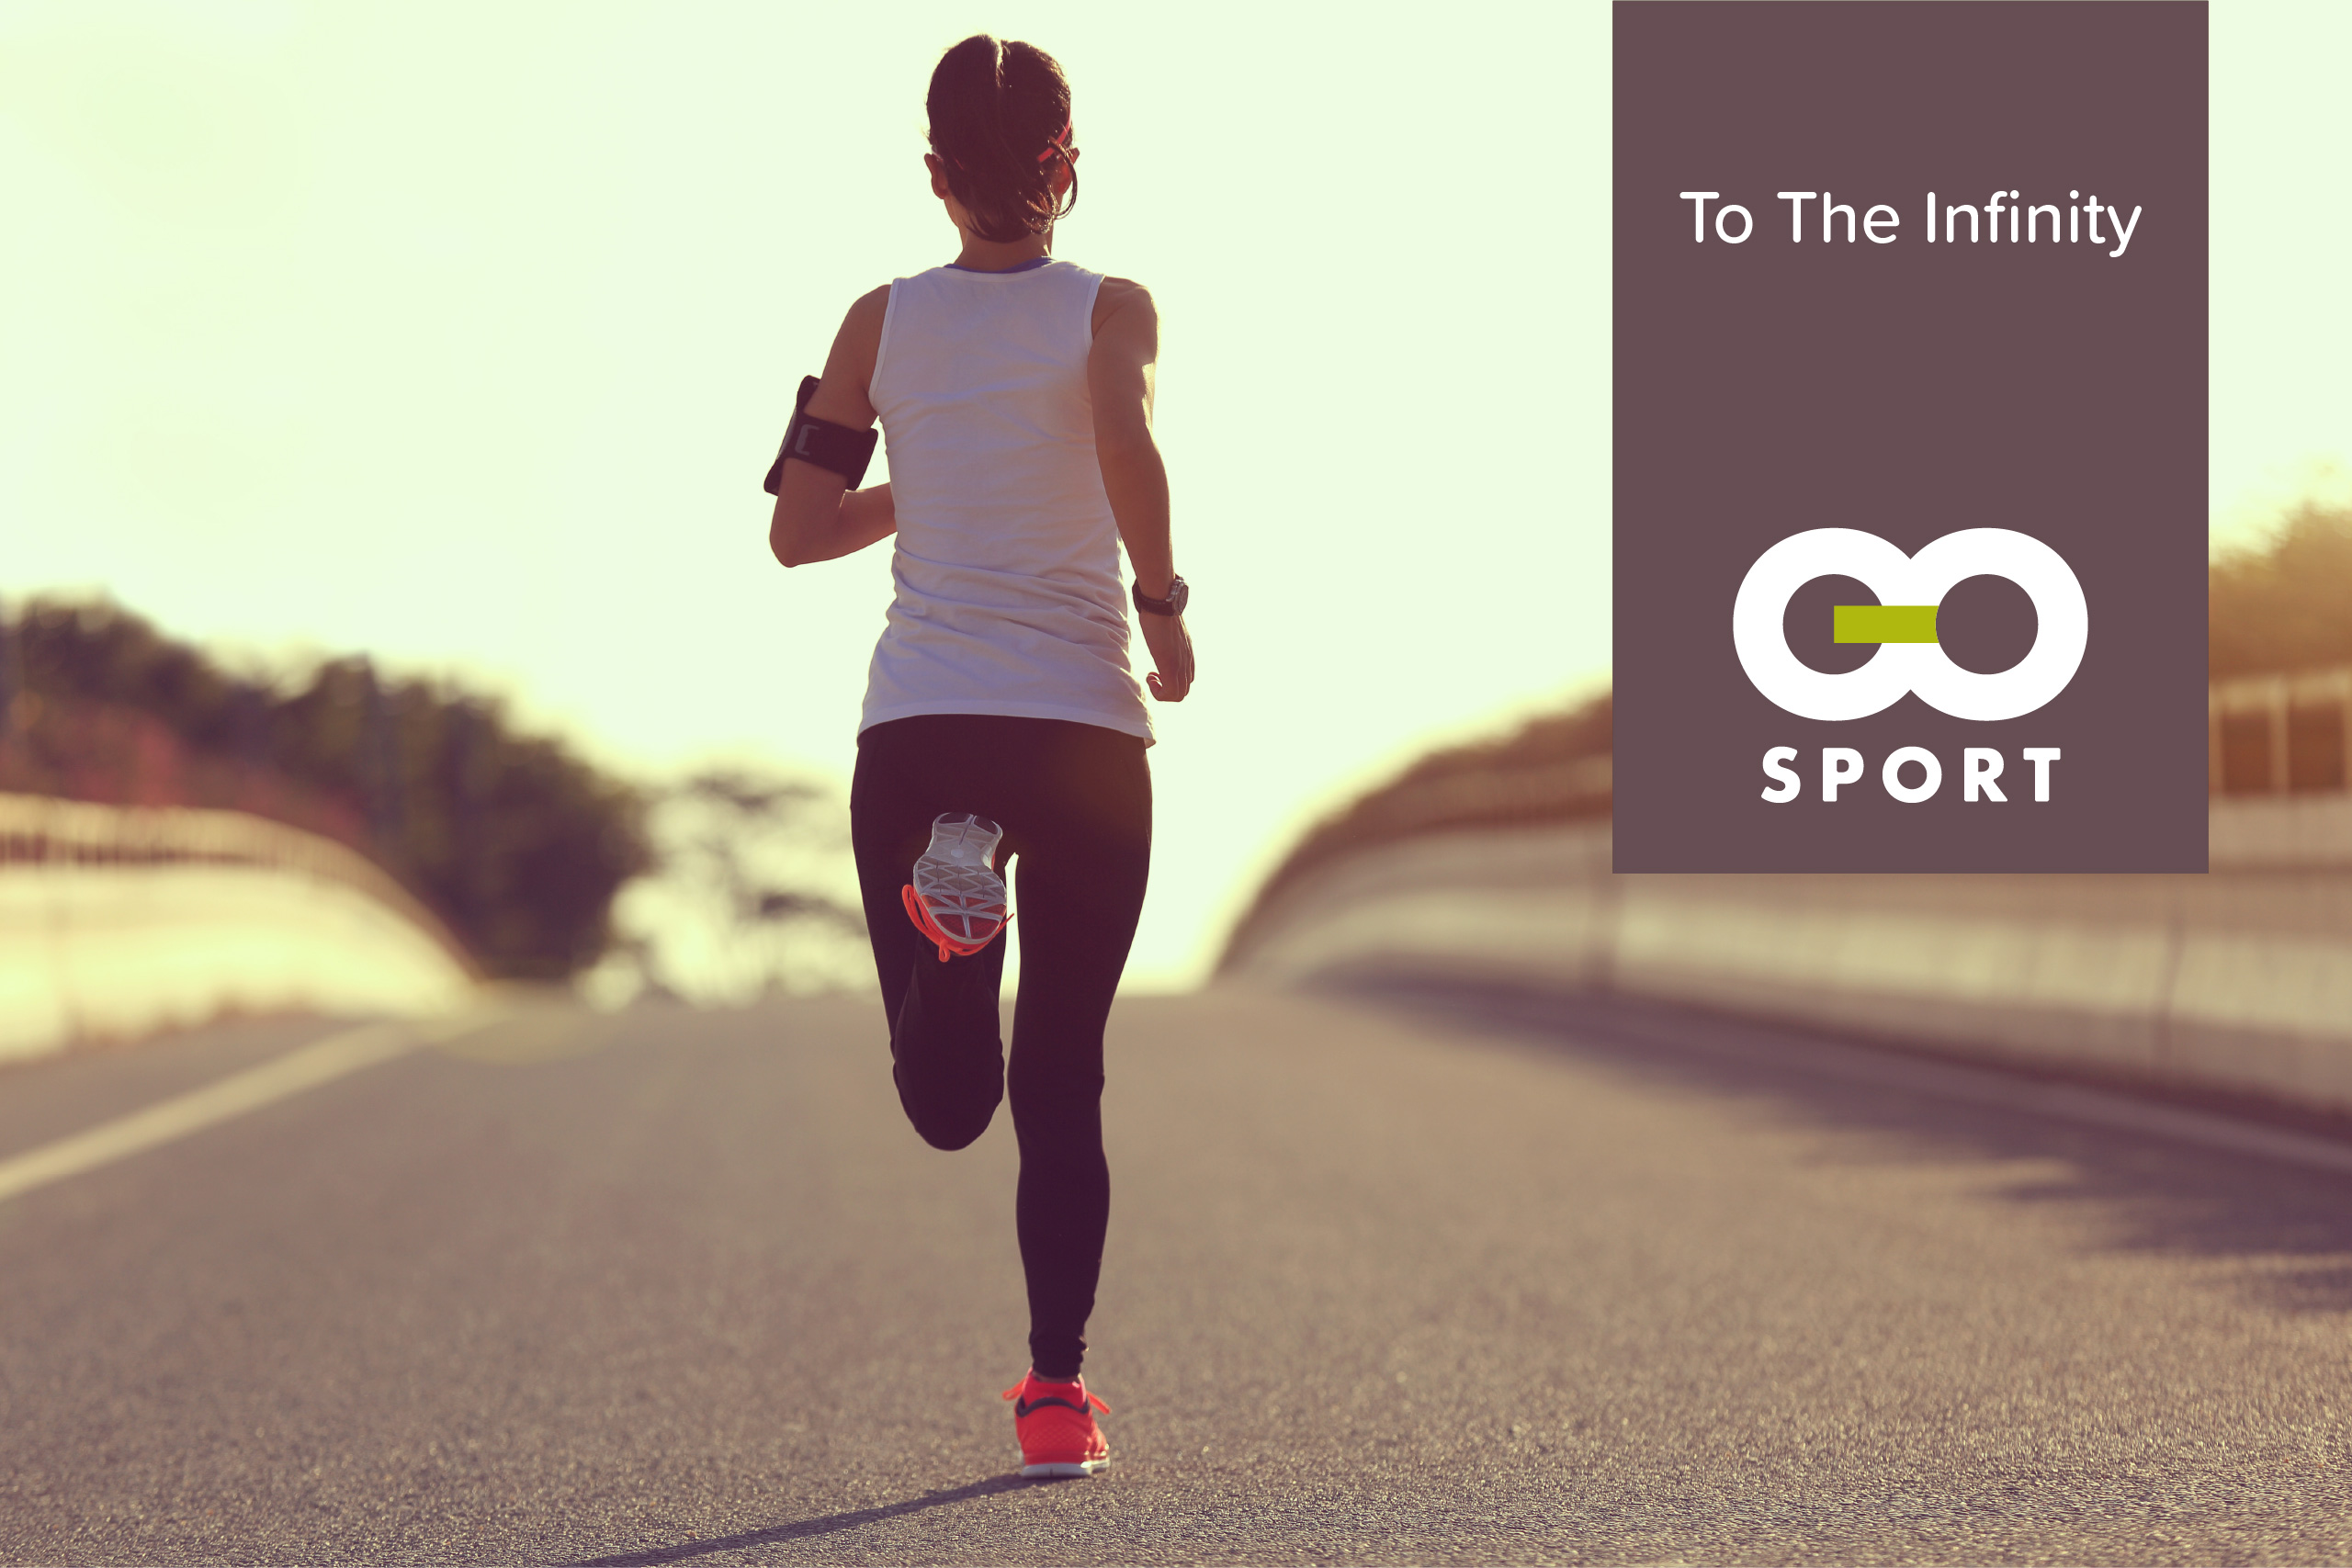 I go in for sport. Go Sport спорт. Go Jogging транскрипция. Go Sport приложение. Go to Sport интернет магазин.